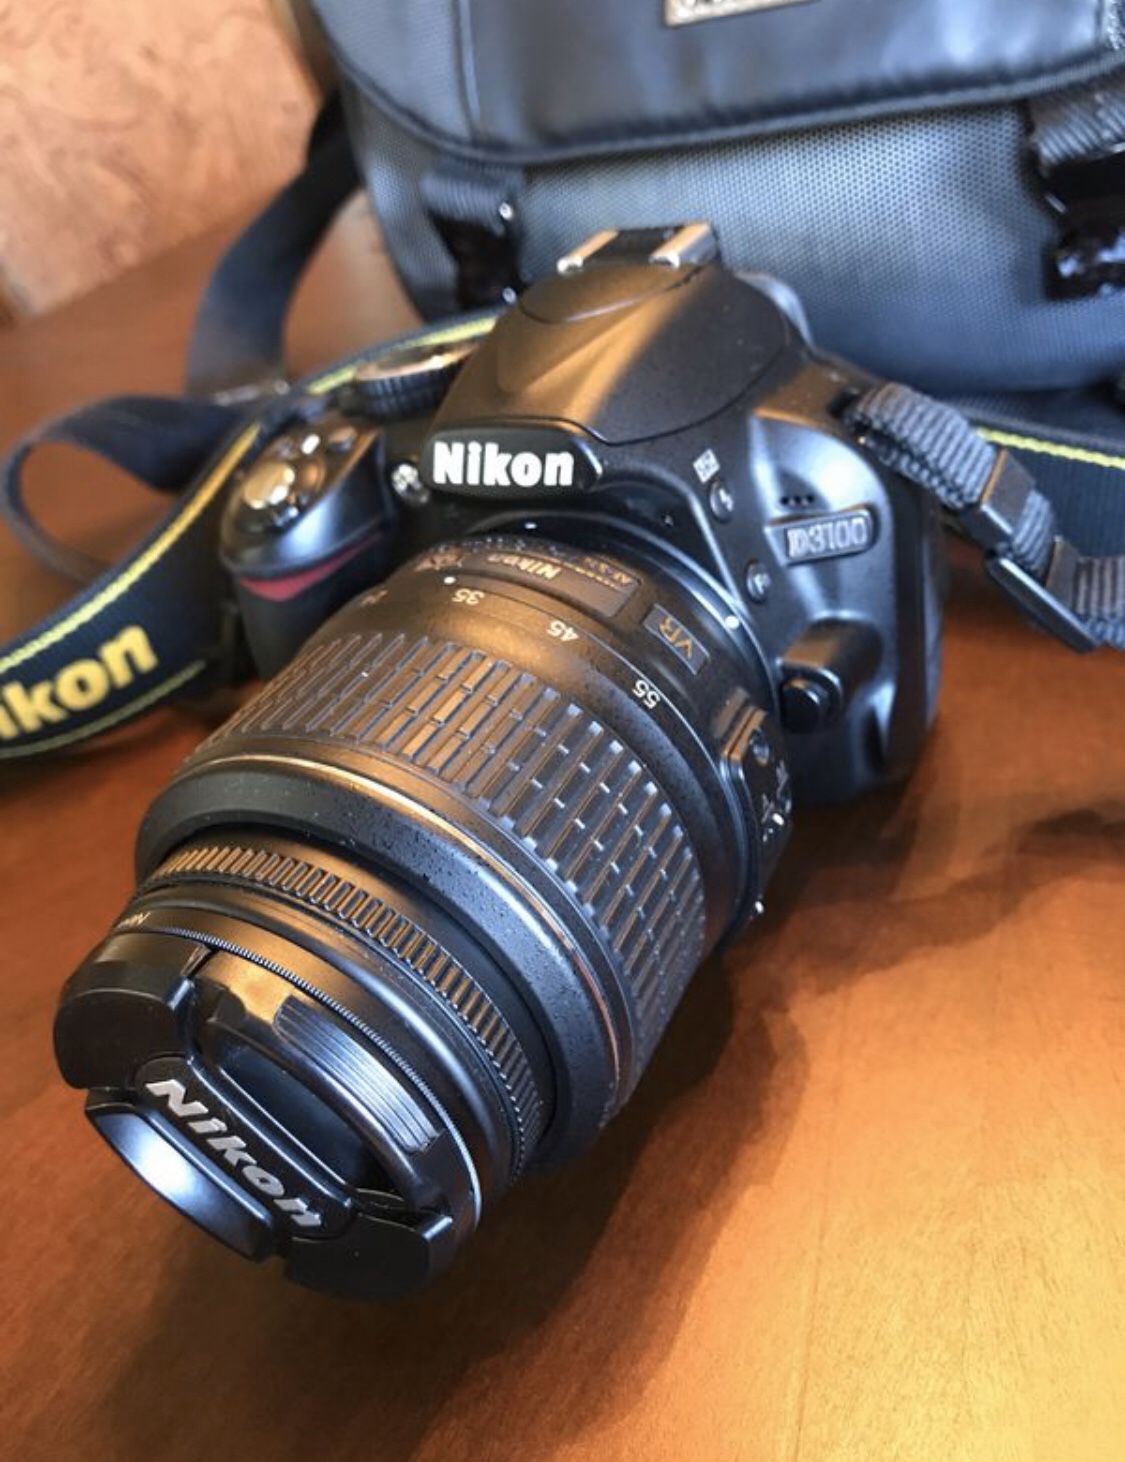 Nikon D3100 DSLR with 18-55mm Autofocus Aspherical Nikon Lens and extras